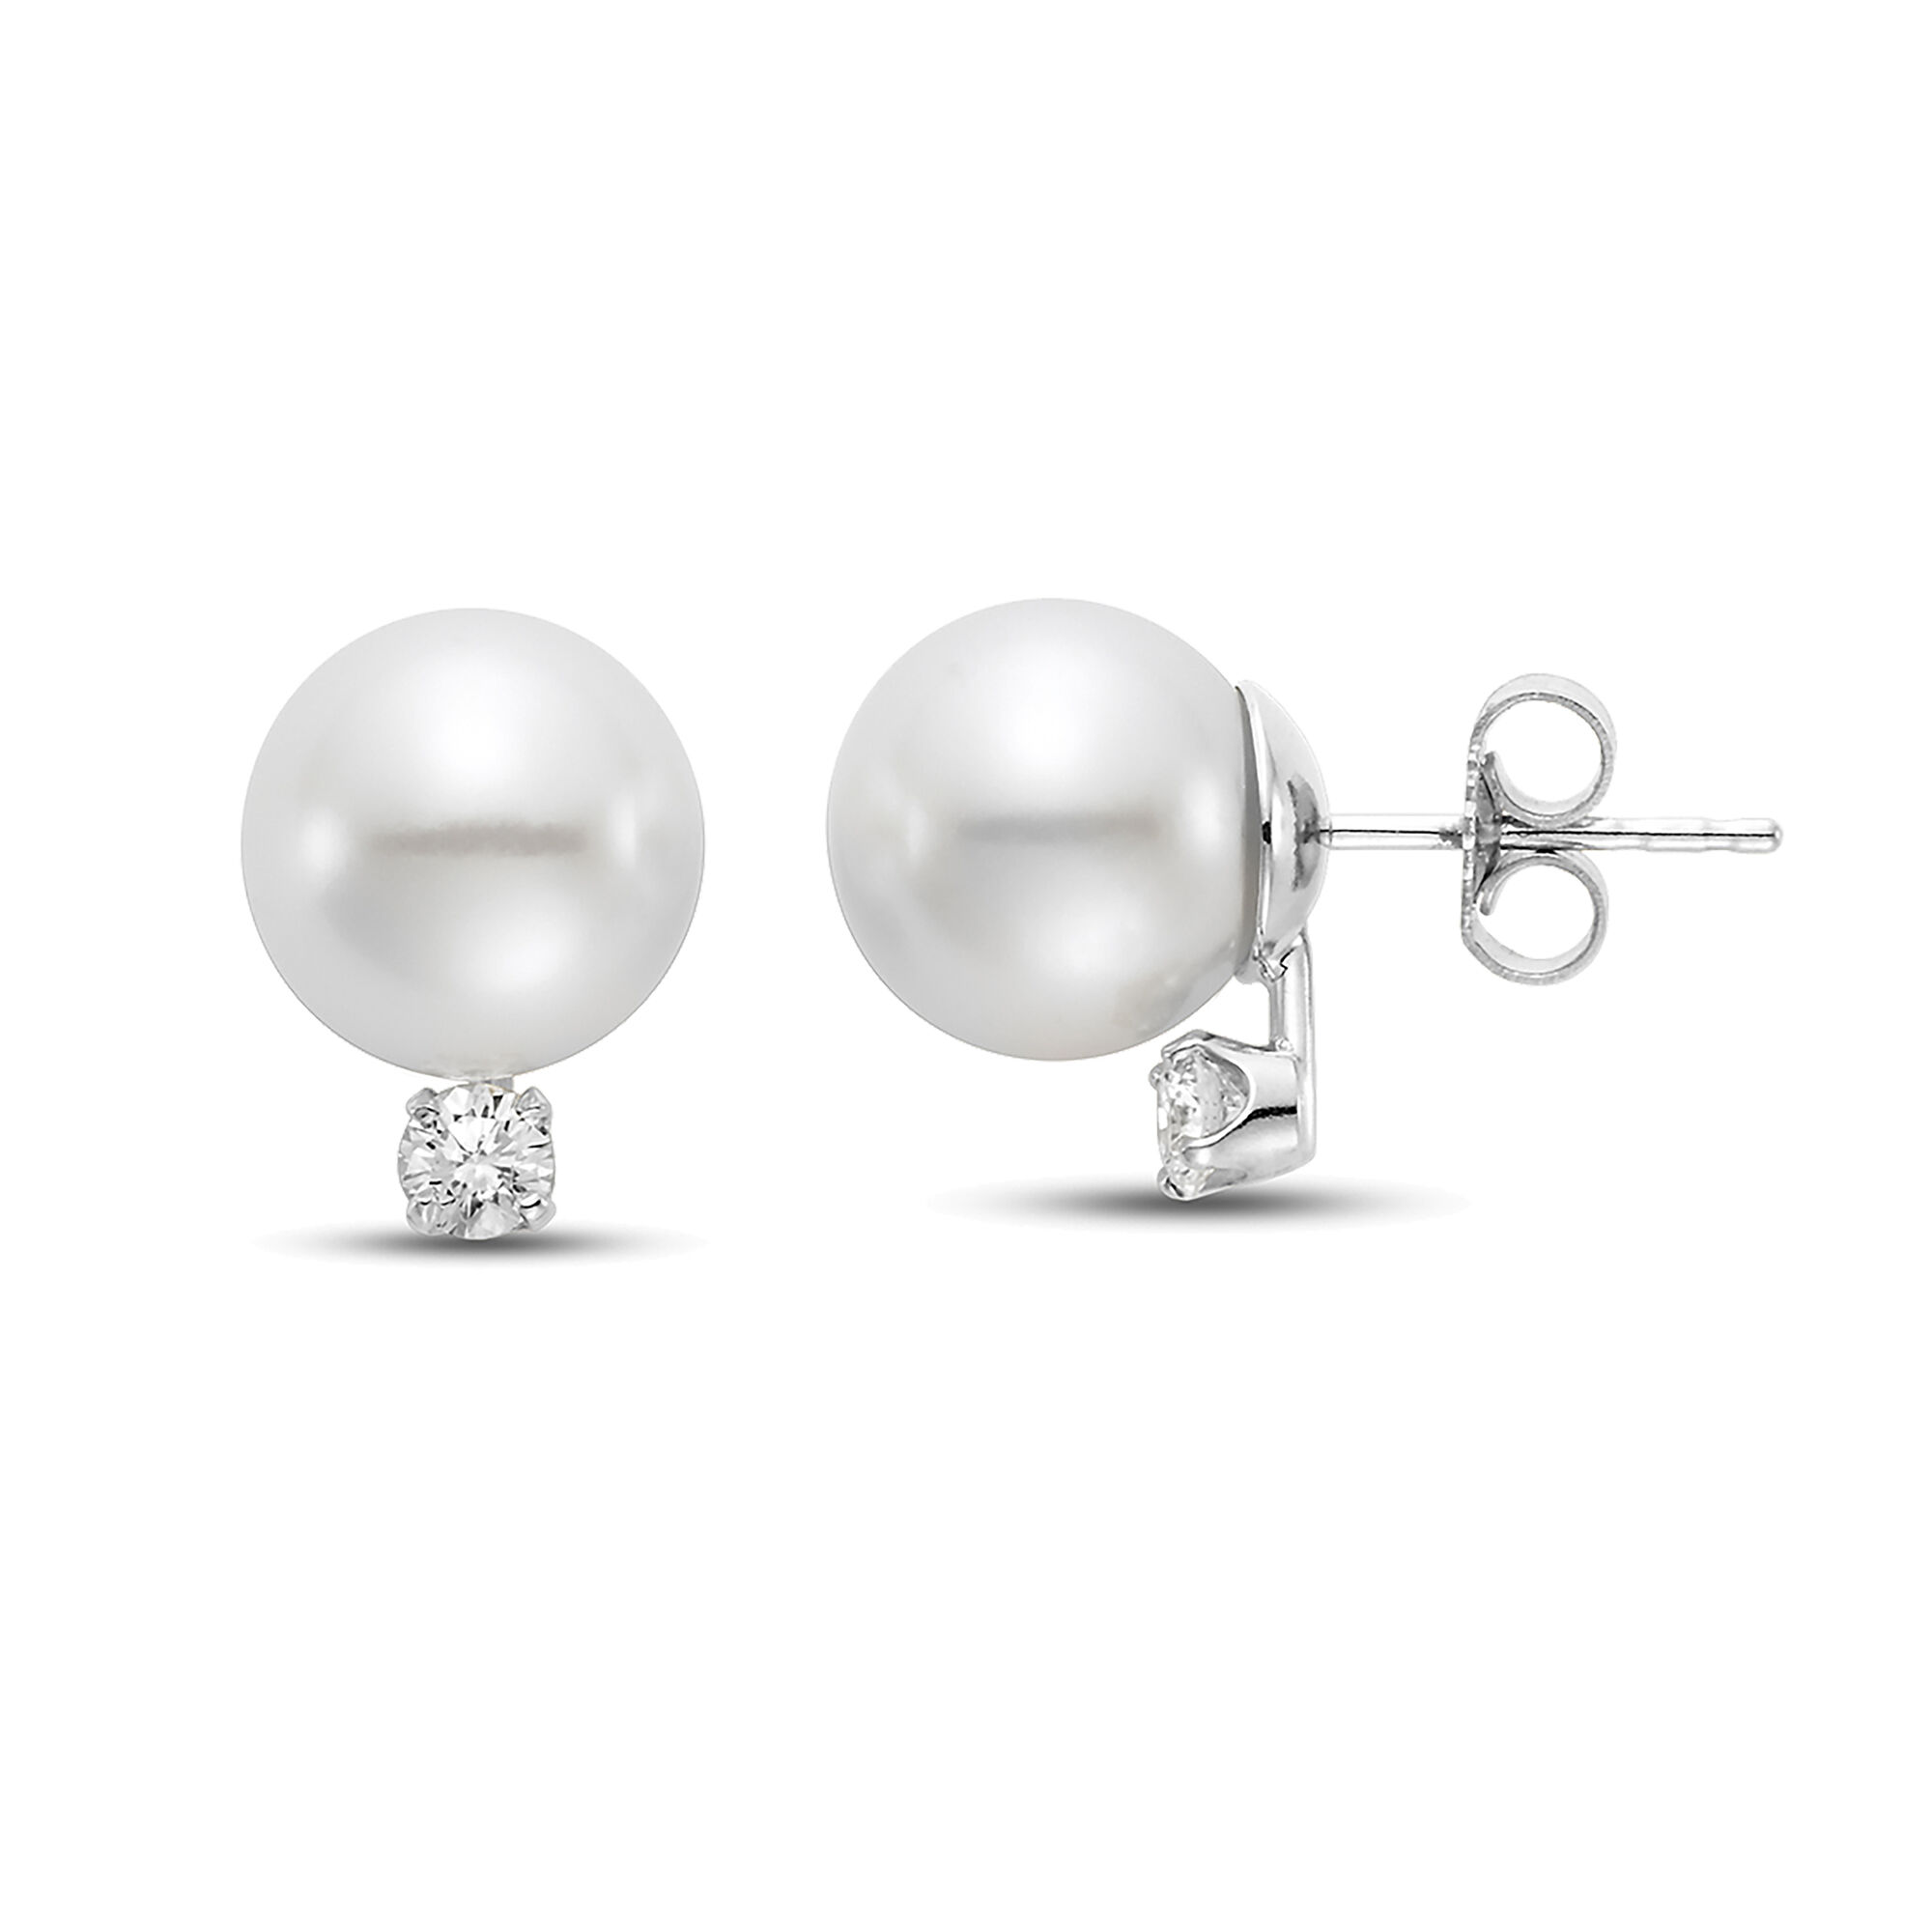 Yoko London Pink Freshwater Pearl and Diamond Earrings in 18 Karat White  Gold | White gold earrings studs, Pearl and diamond earrings, Pink sapphire  earrings